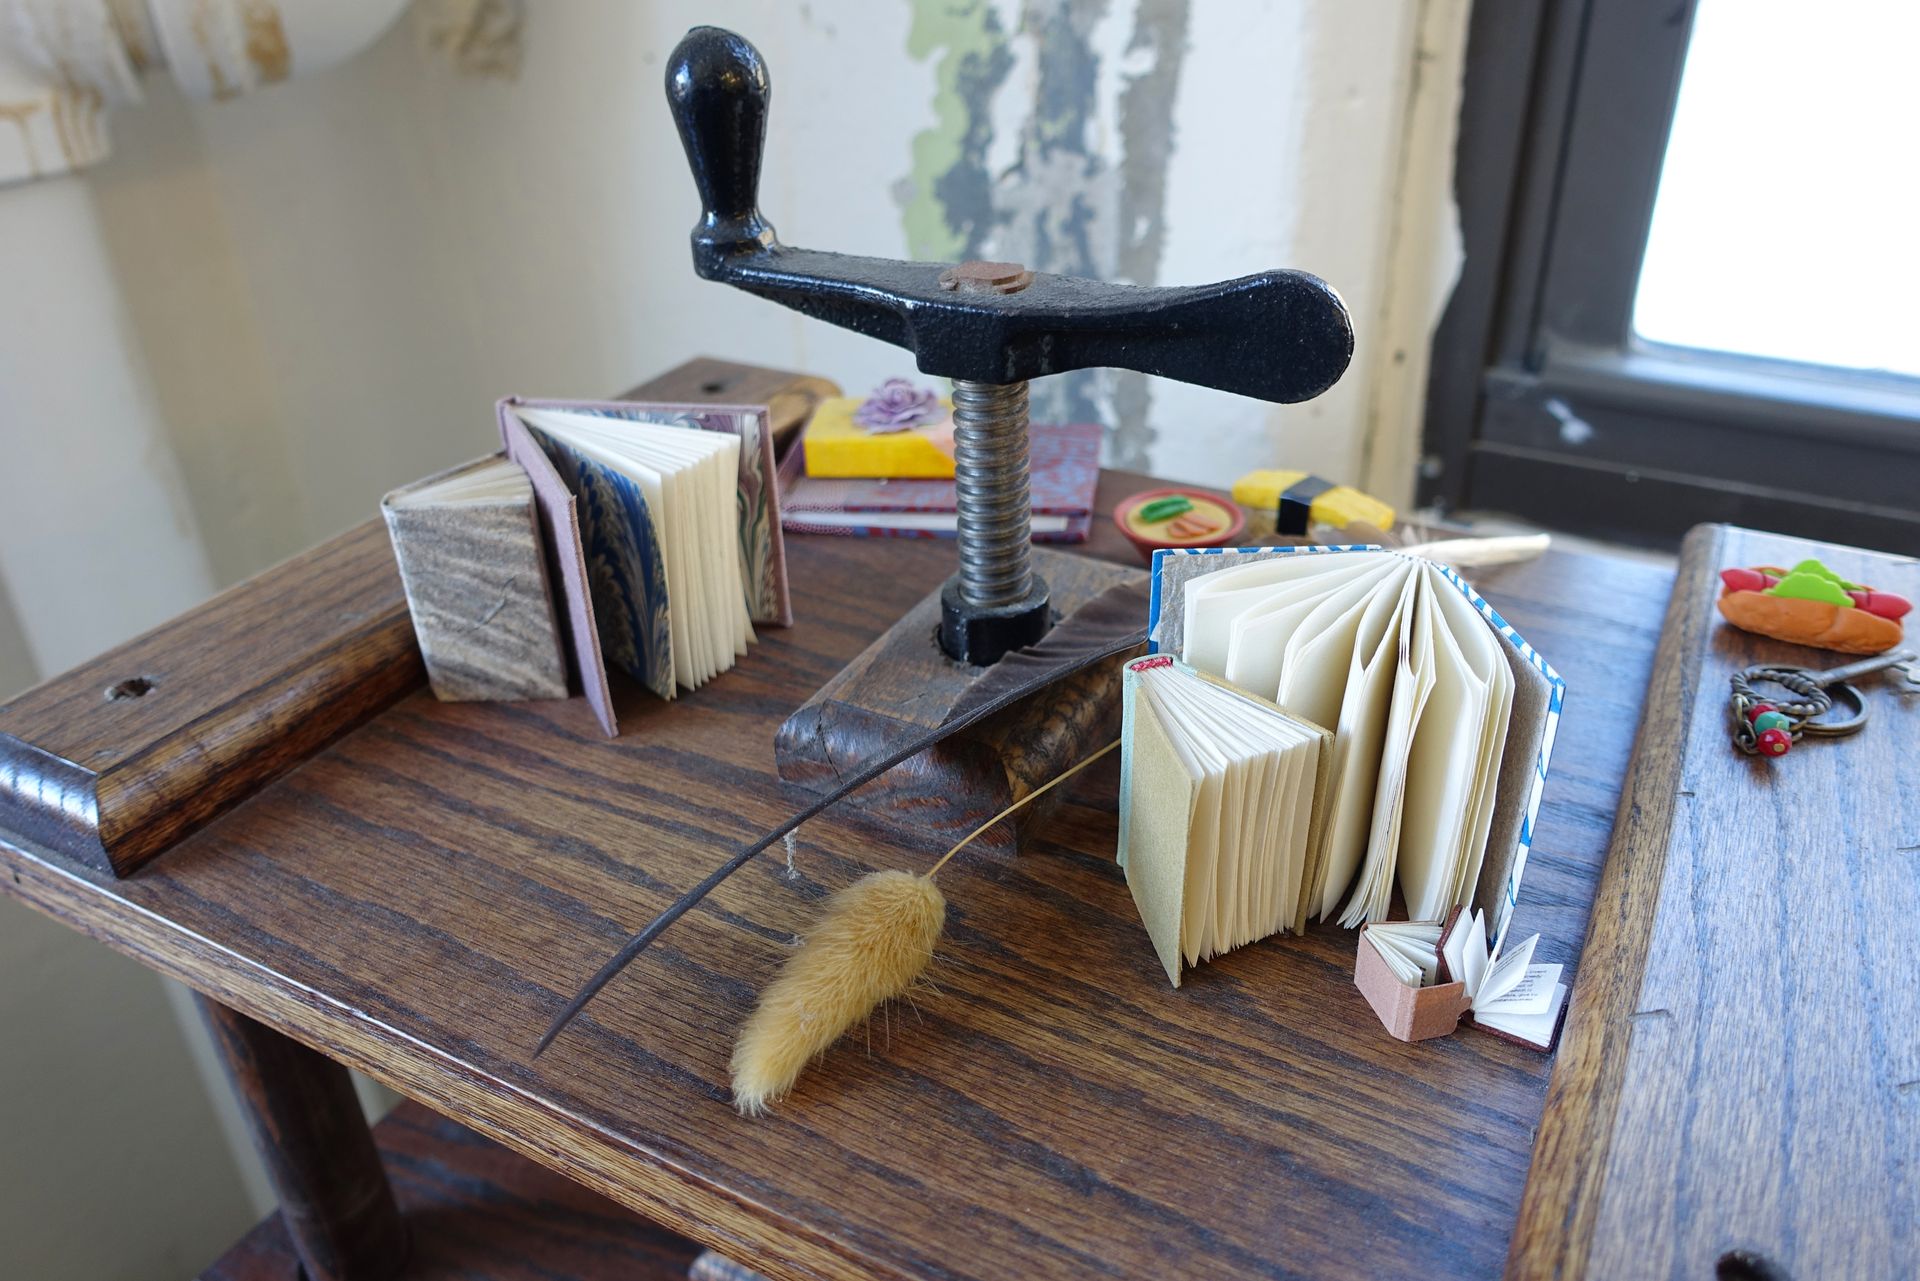 Miniature bound books on display